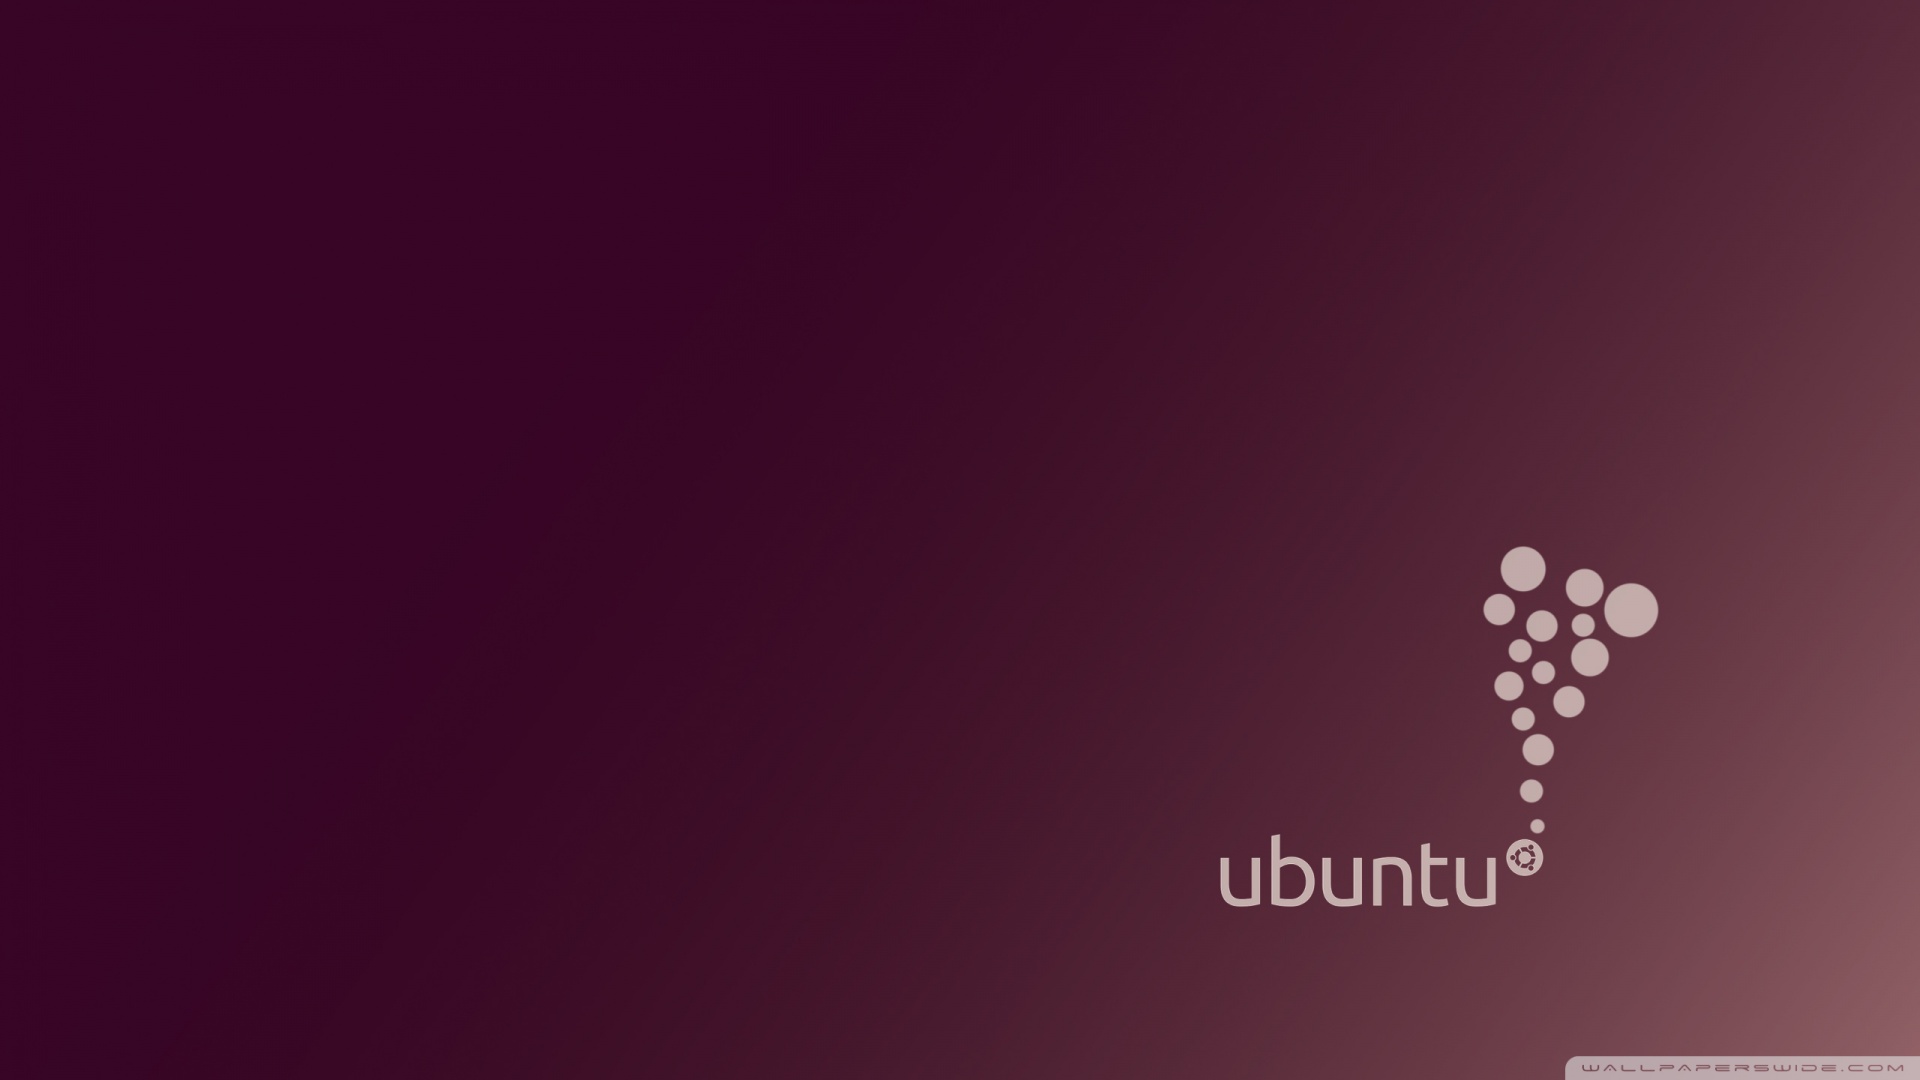 ubuntu linux wallpapers images wallpaper 1920x1080 1920x1080